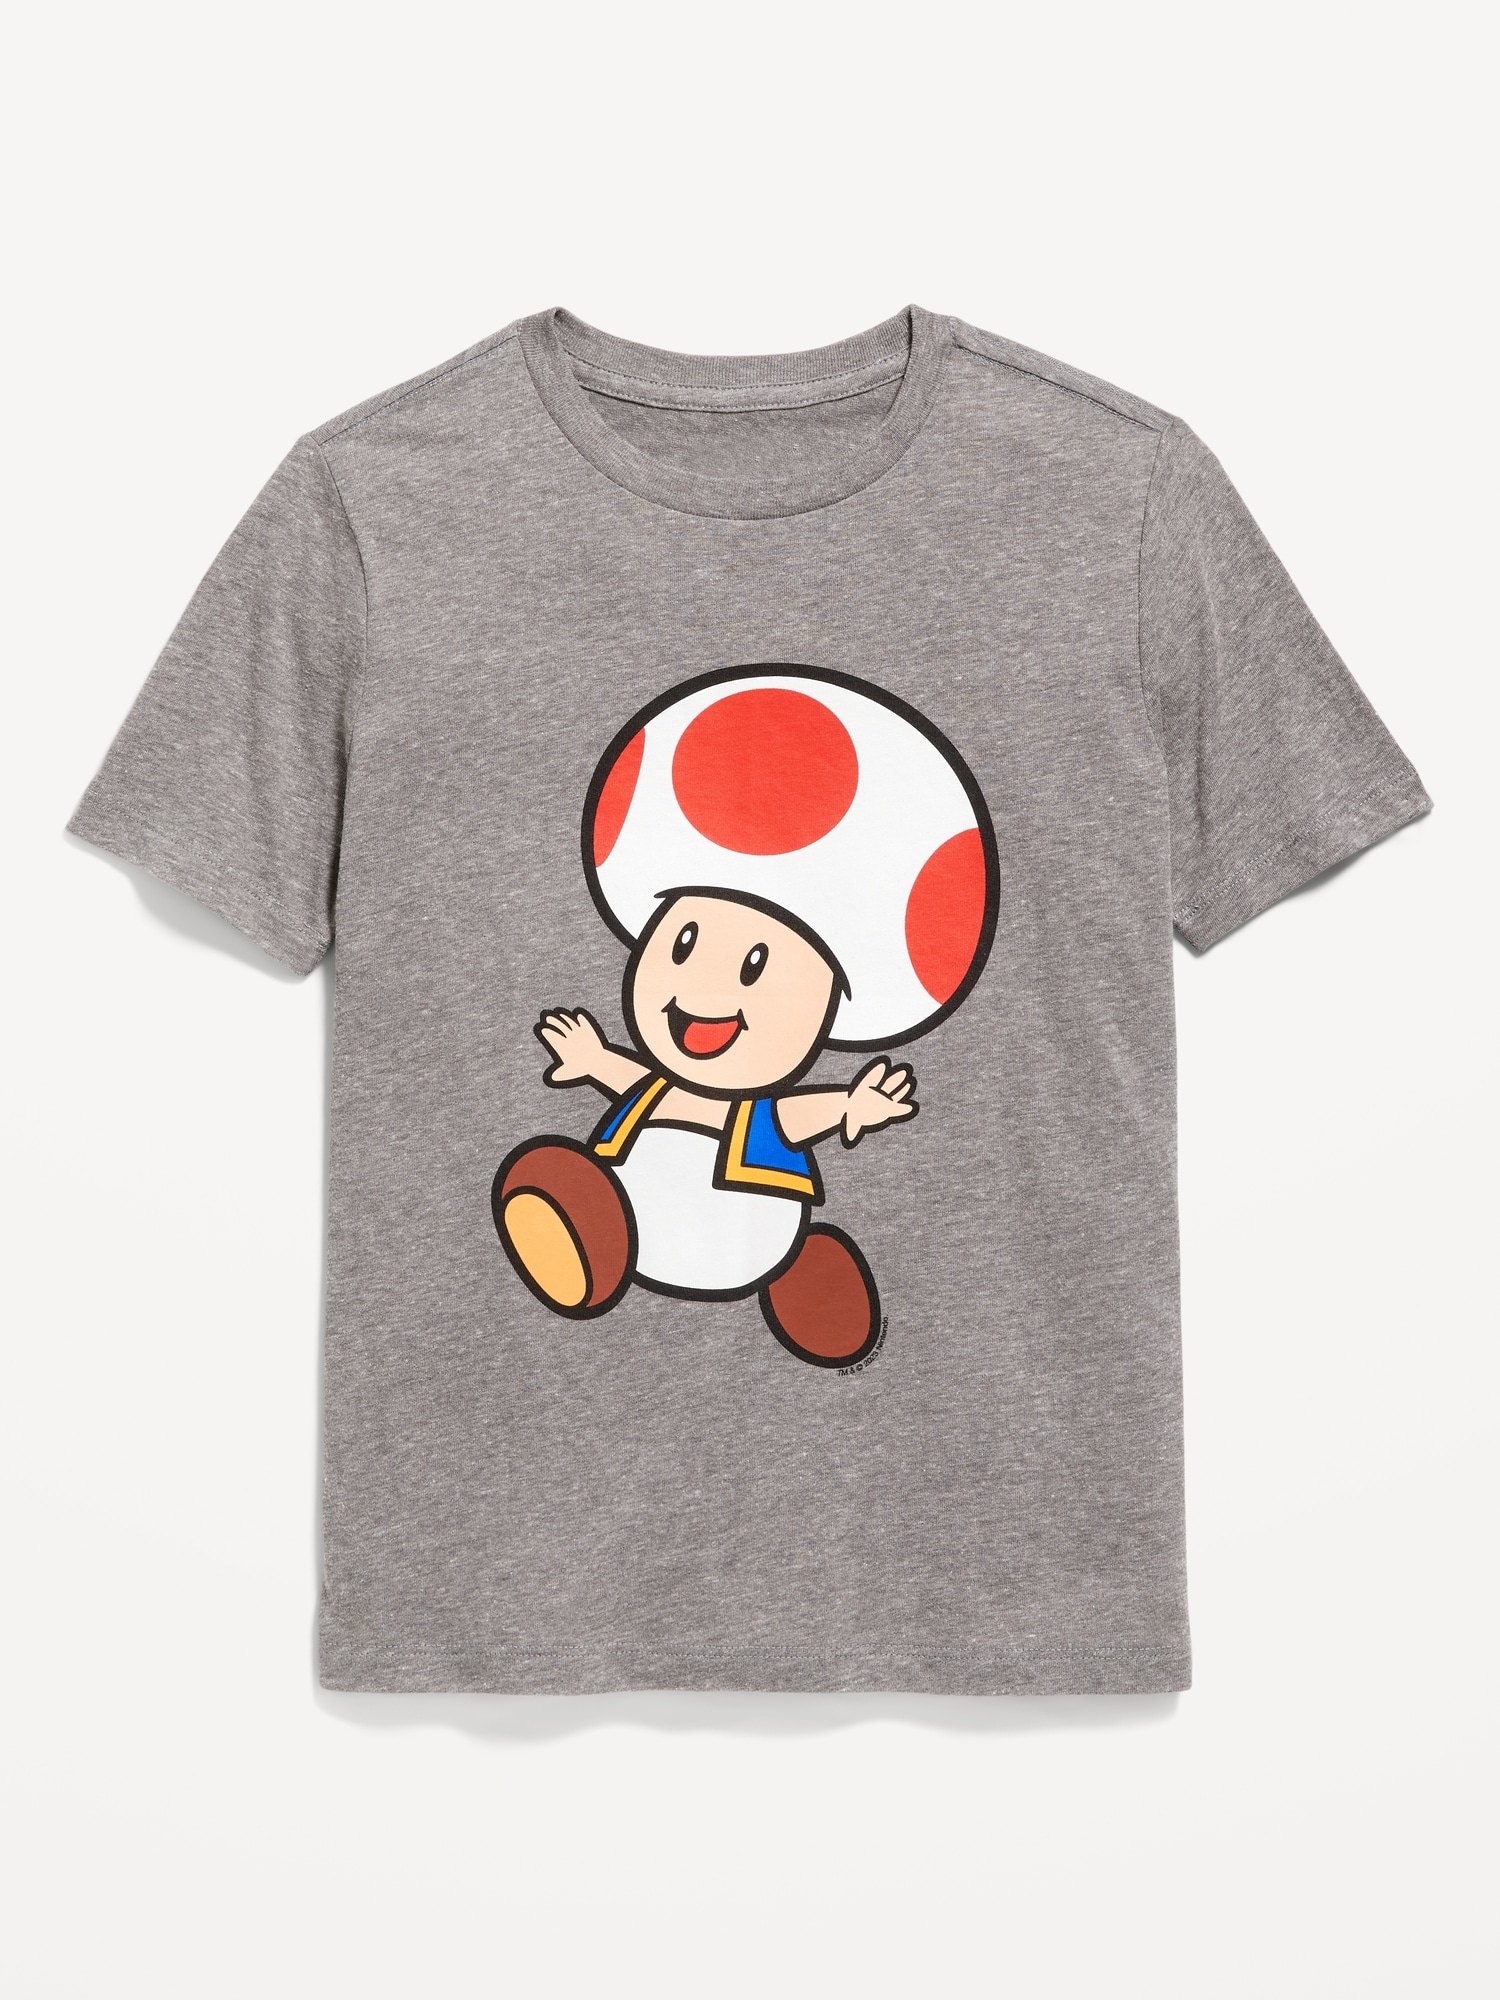 Super Mario™ Gender-Neutral Graphic T-Shirt for Kids